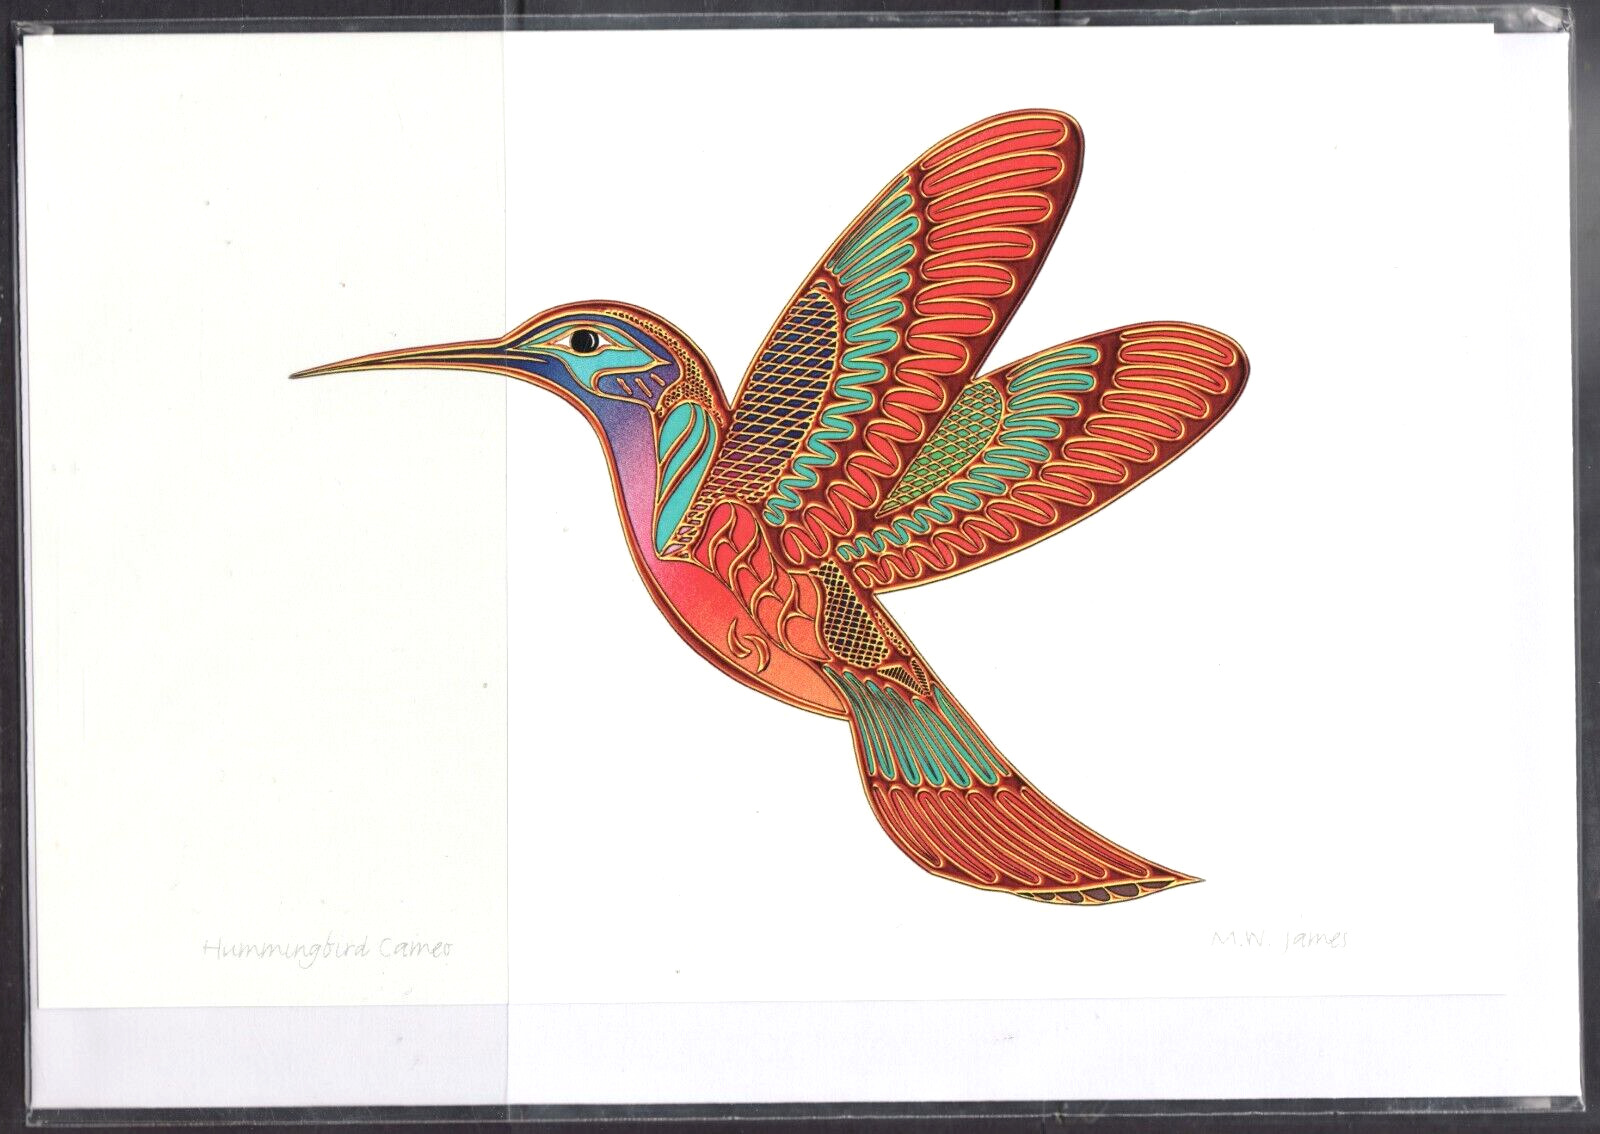 CAMEO - Stunning Hummingbird Design by M.W. James - New 6\